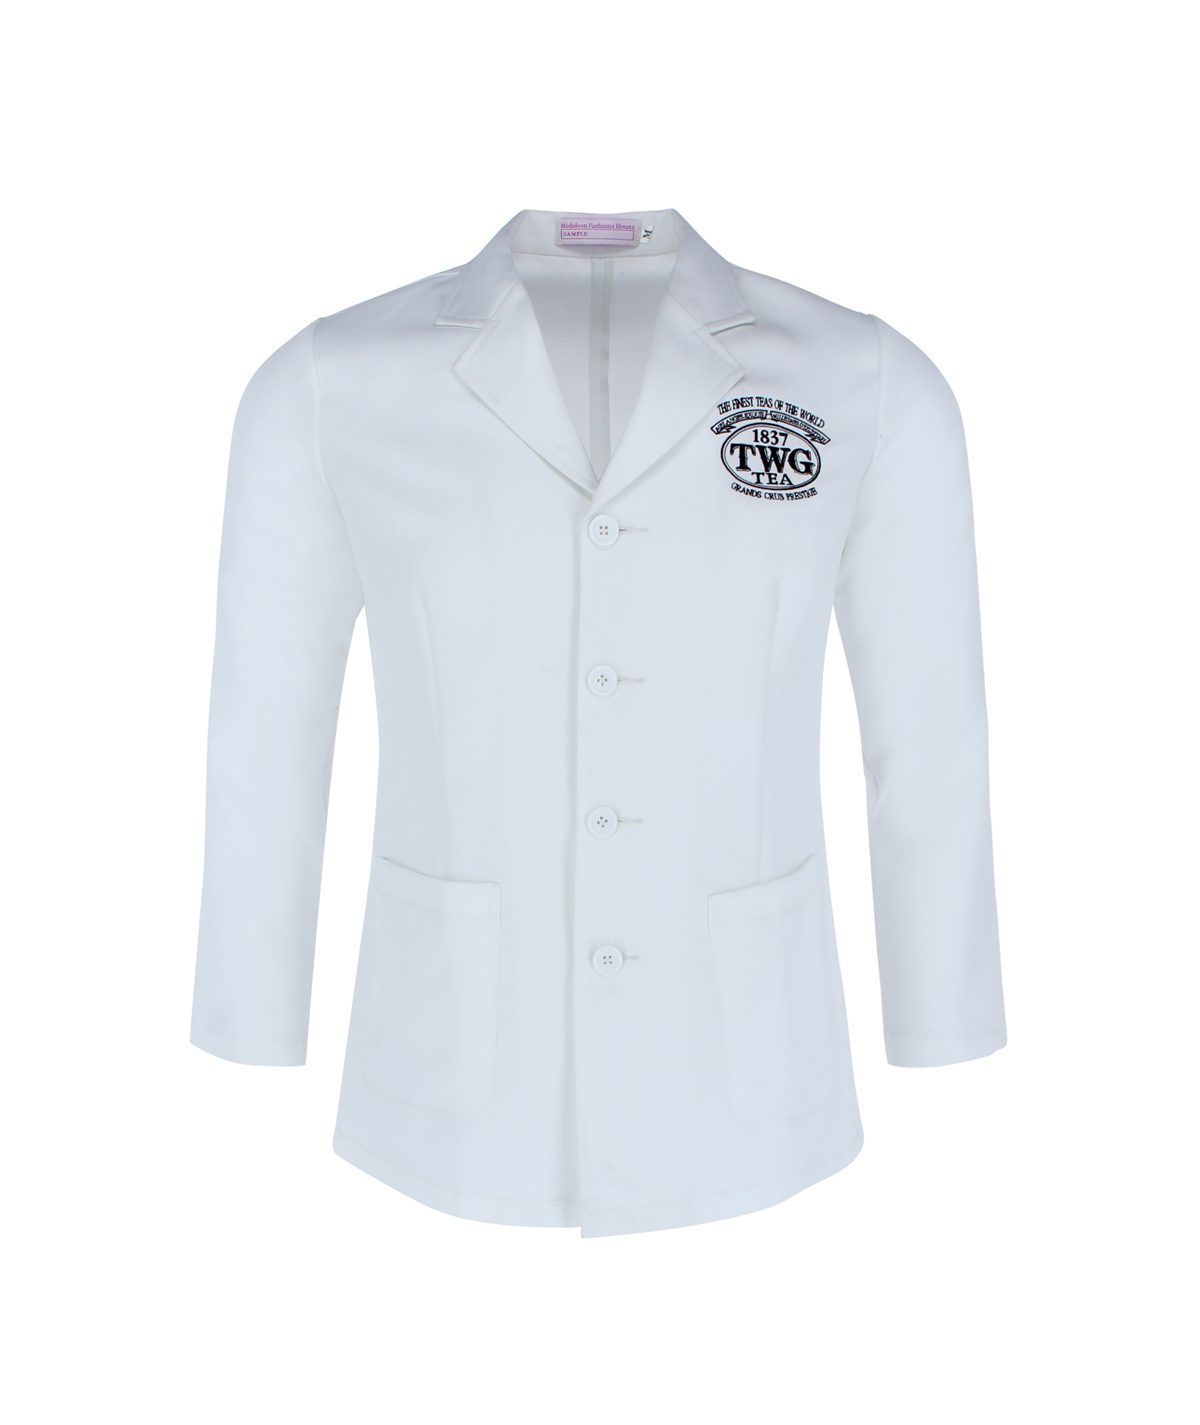 white-labcoat-uniform-singapore-manufactured-labcoats-for-pharmacy-labcoats-F&B smart labcoats-healthcare-labcoats